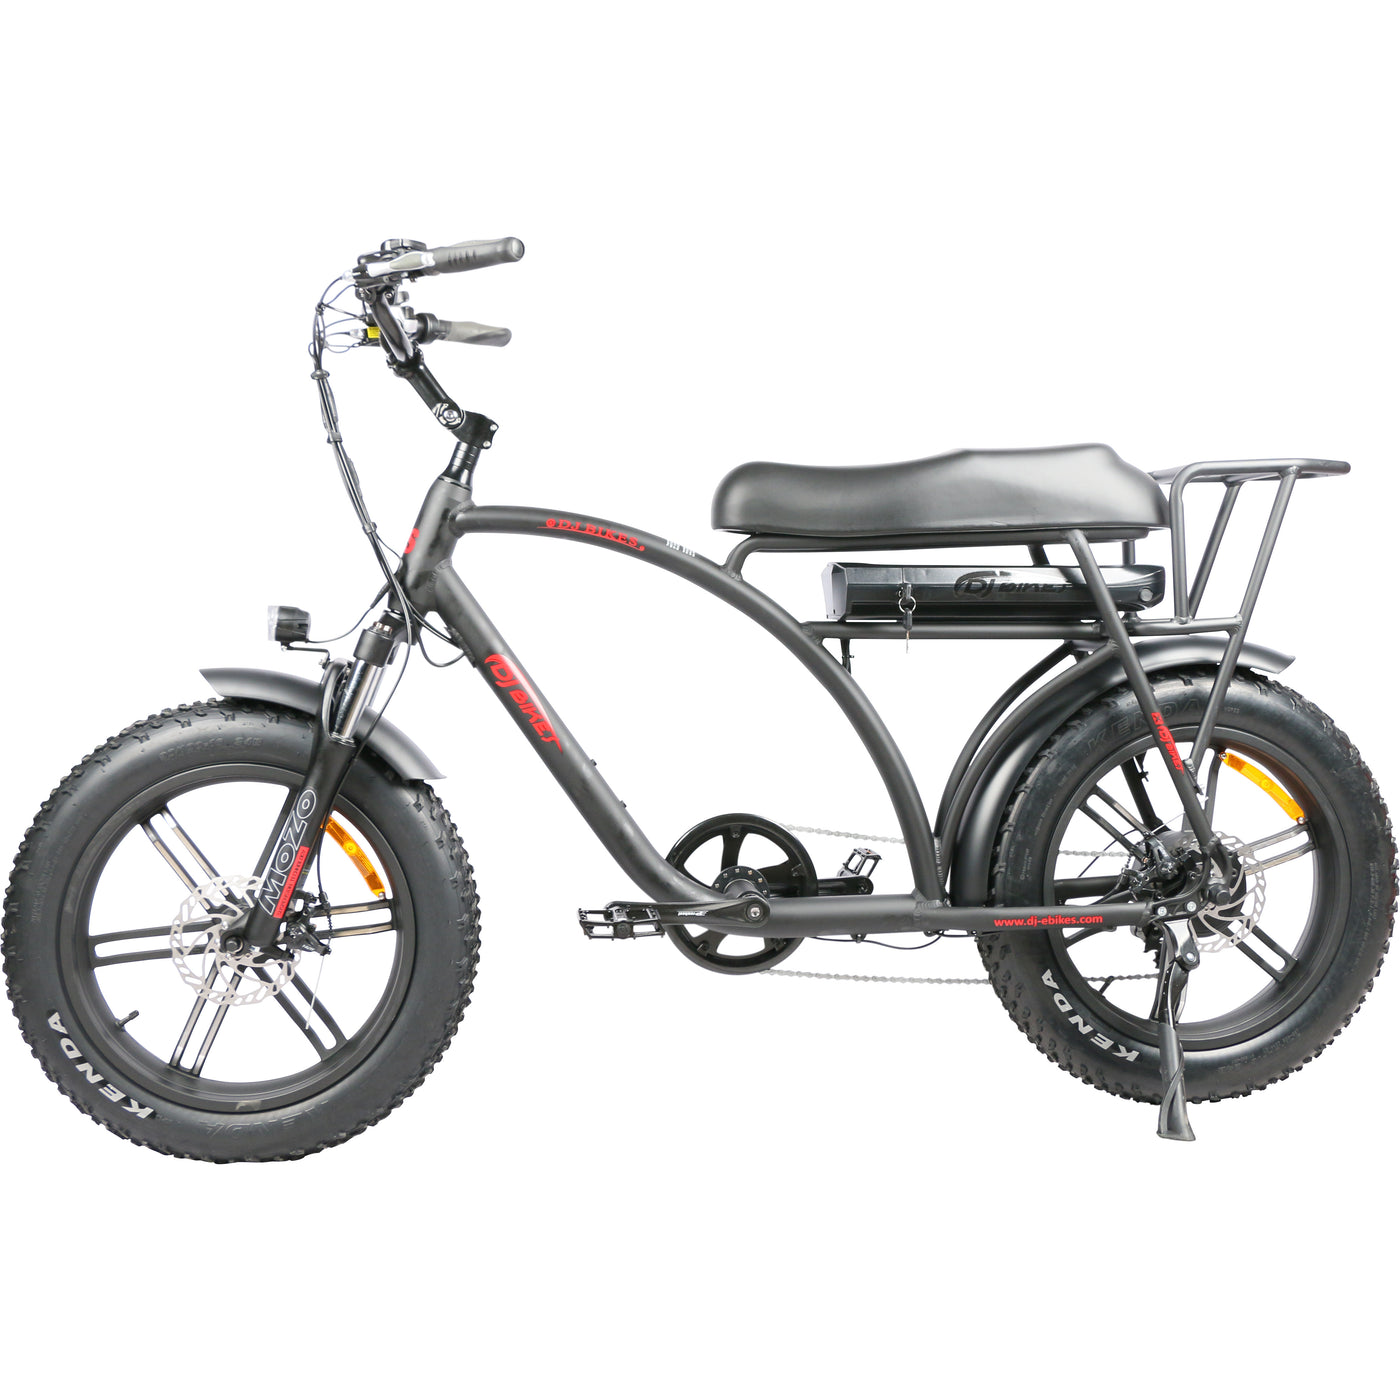 Electric Mini Bike, DJ Super Bike, fat tire retro mini bike style ebike